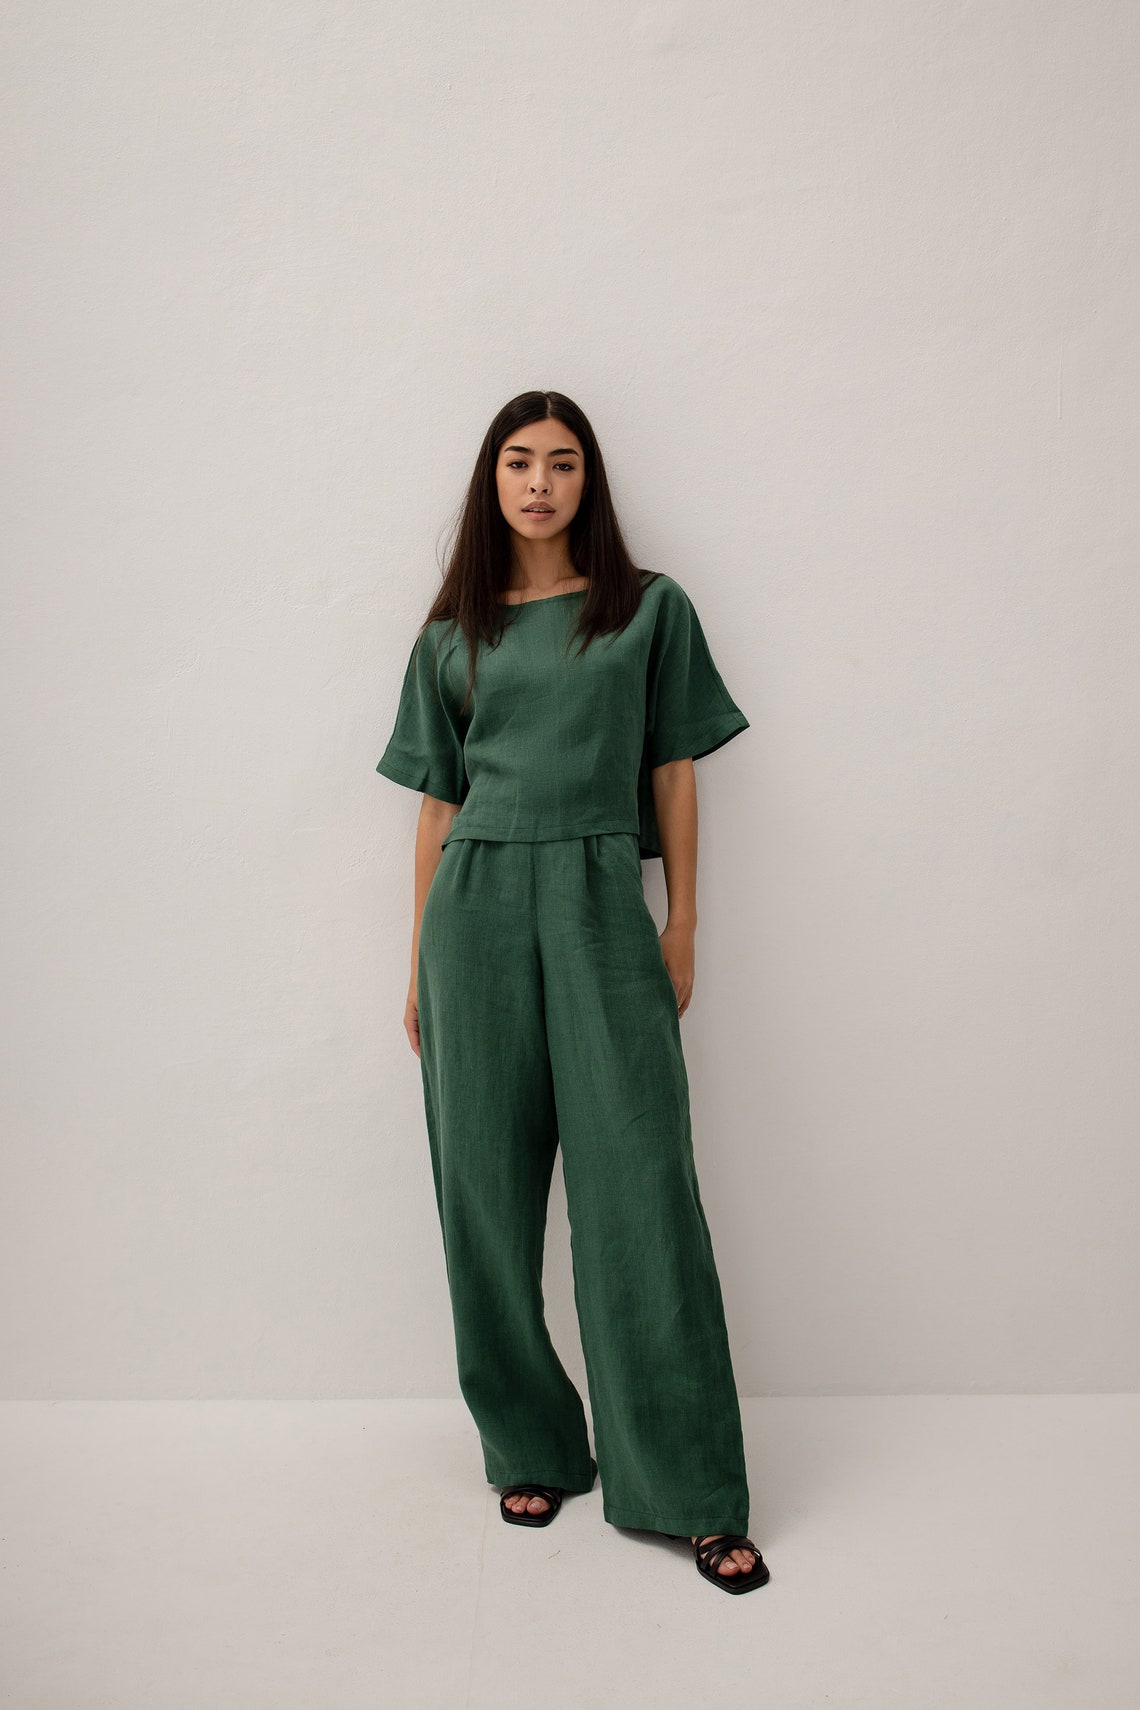 Emerald Green Linen Pants for Women - Etsy